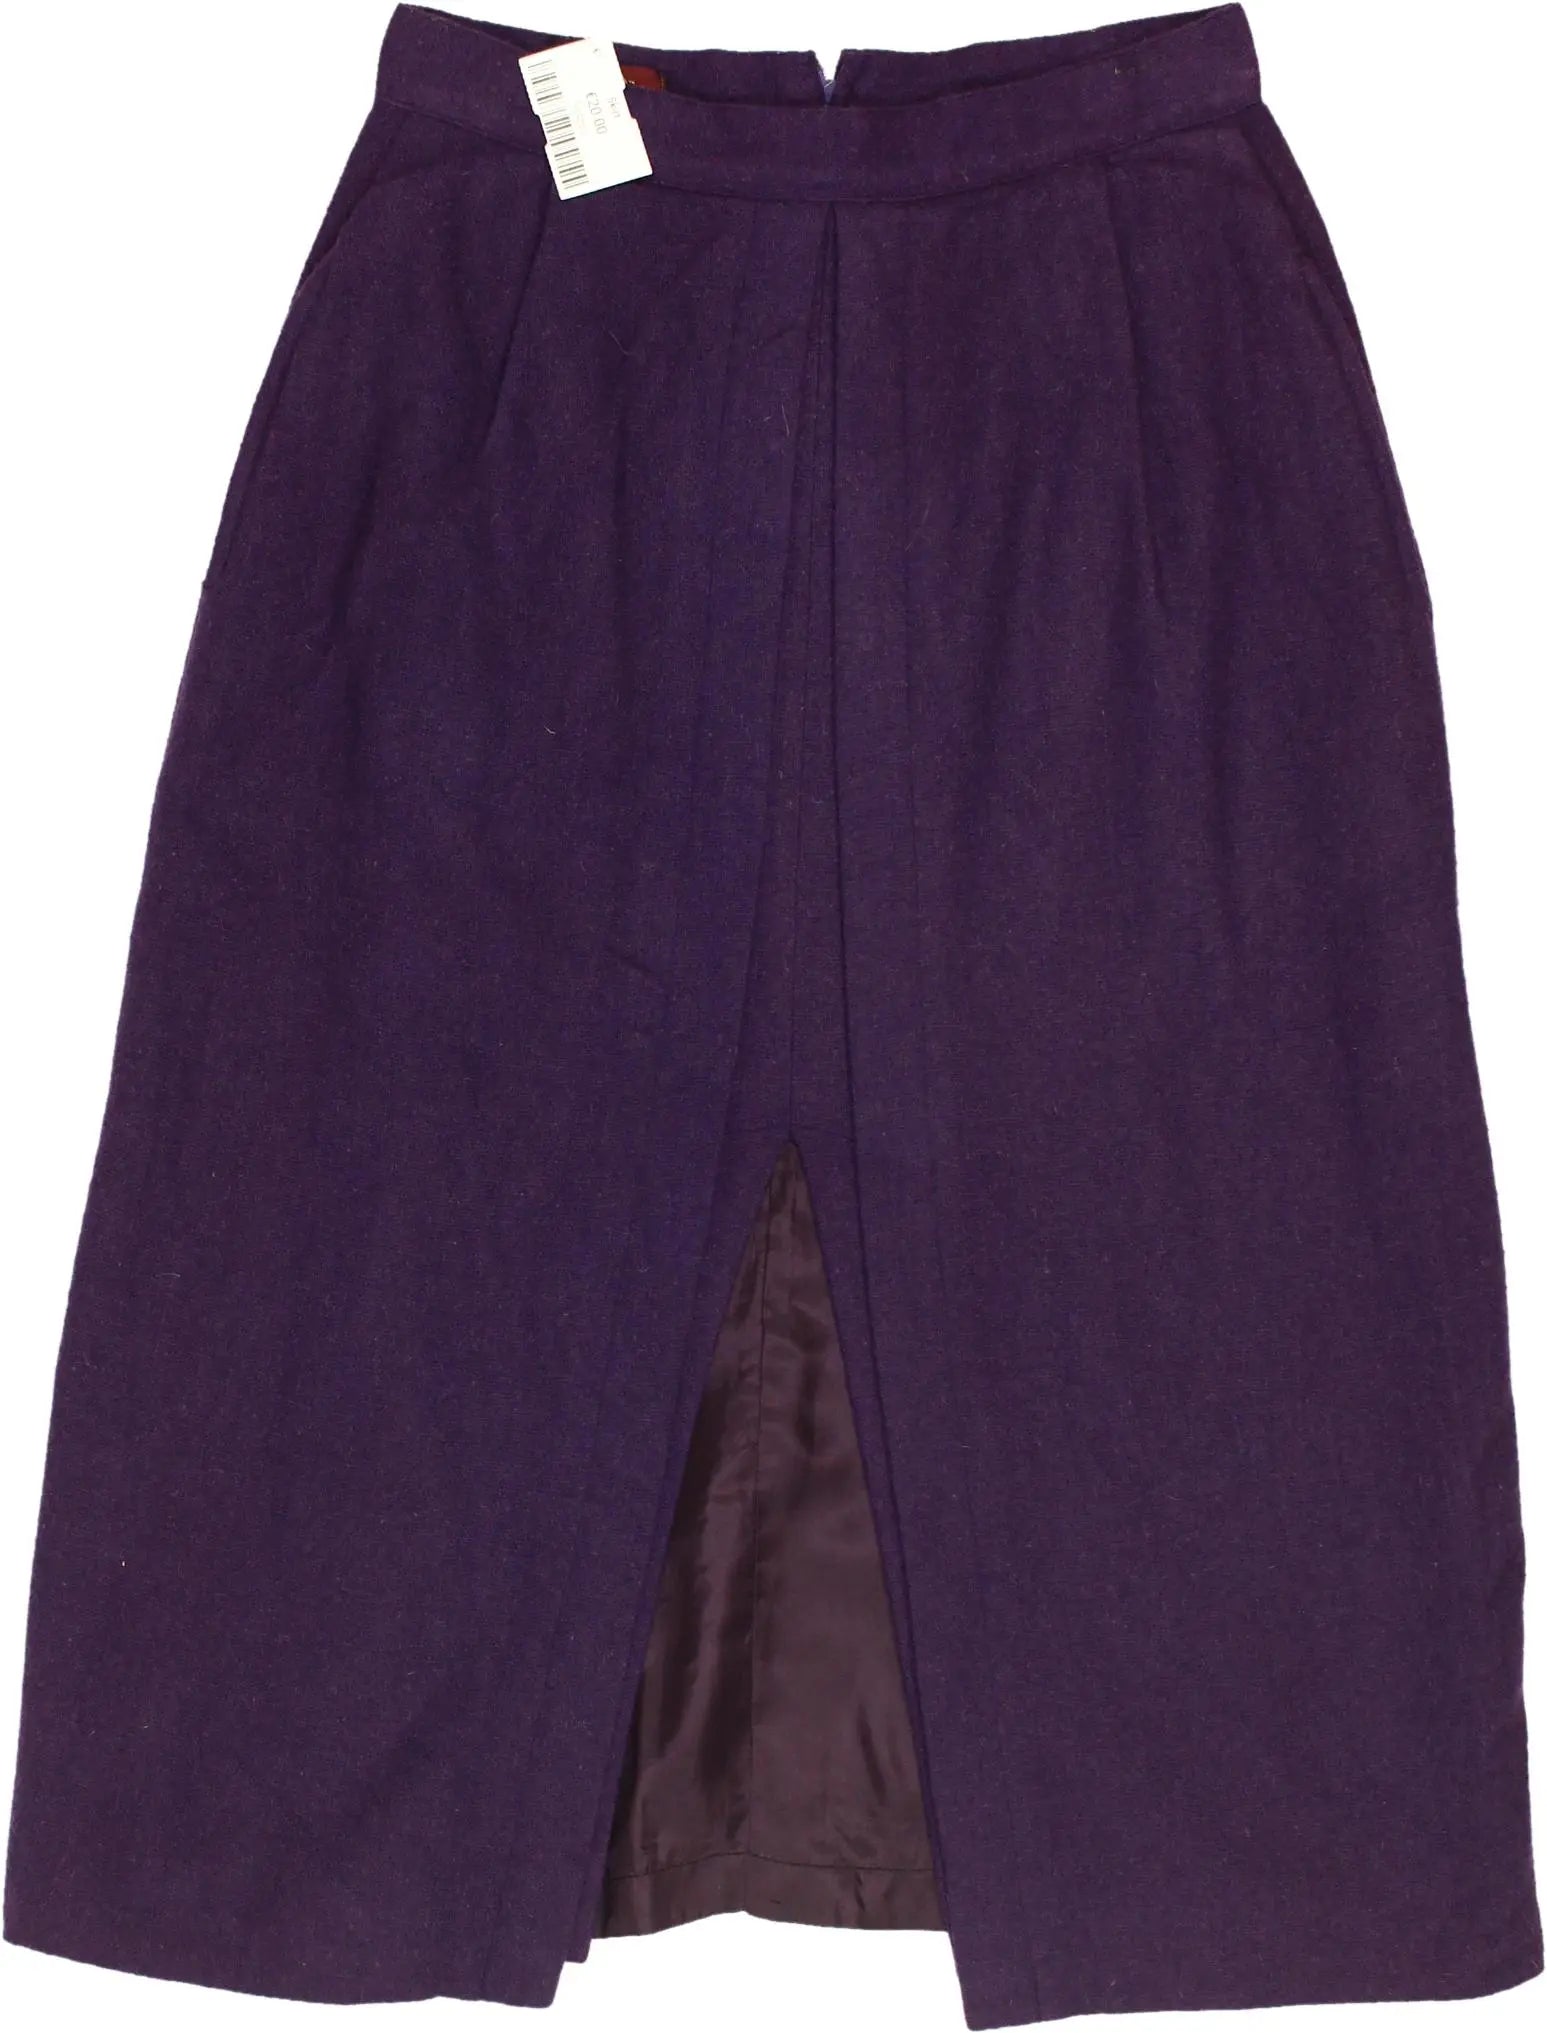 Ferrucio - Purple midi skirt- ThriftTale.com - Vintage and second handclothing